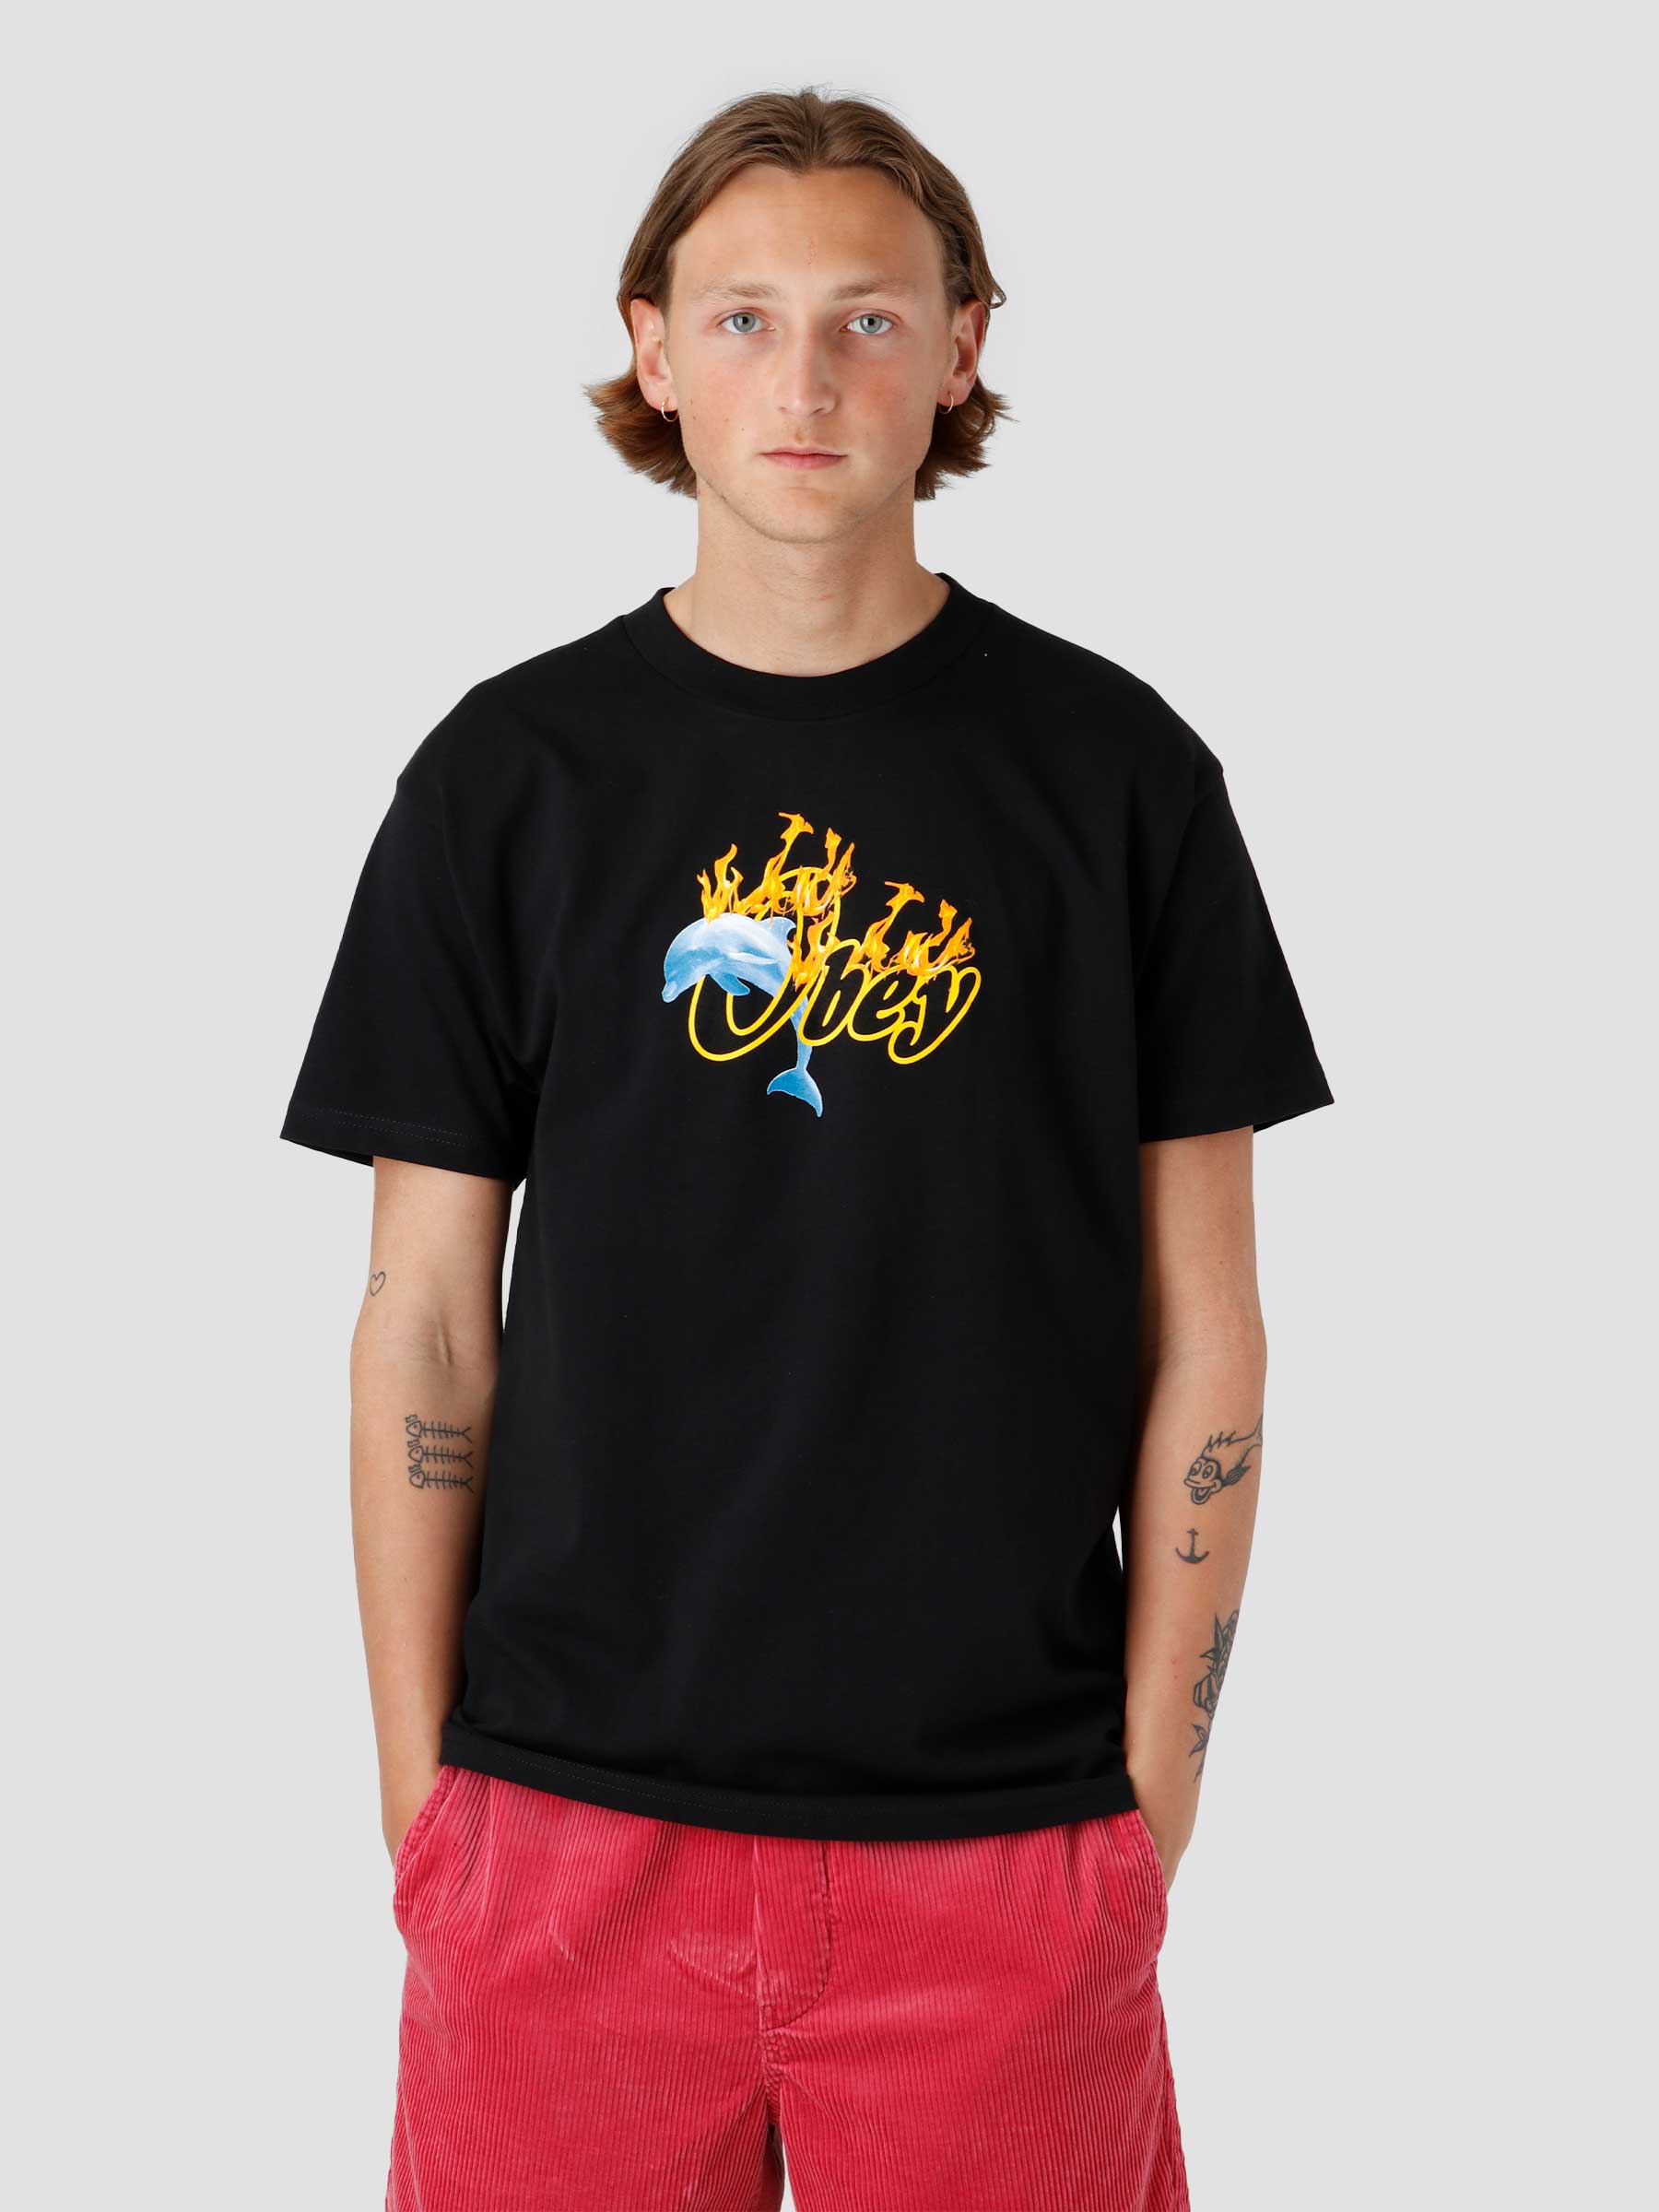 Obey Jump Through Hoops T-shirt Black 165263028